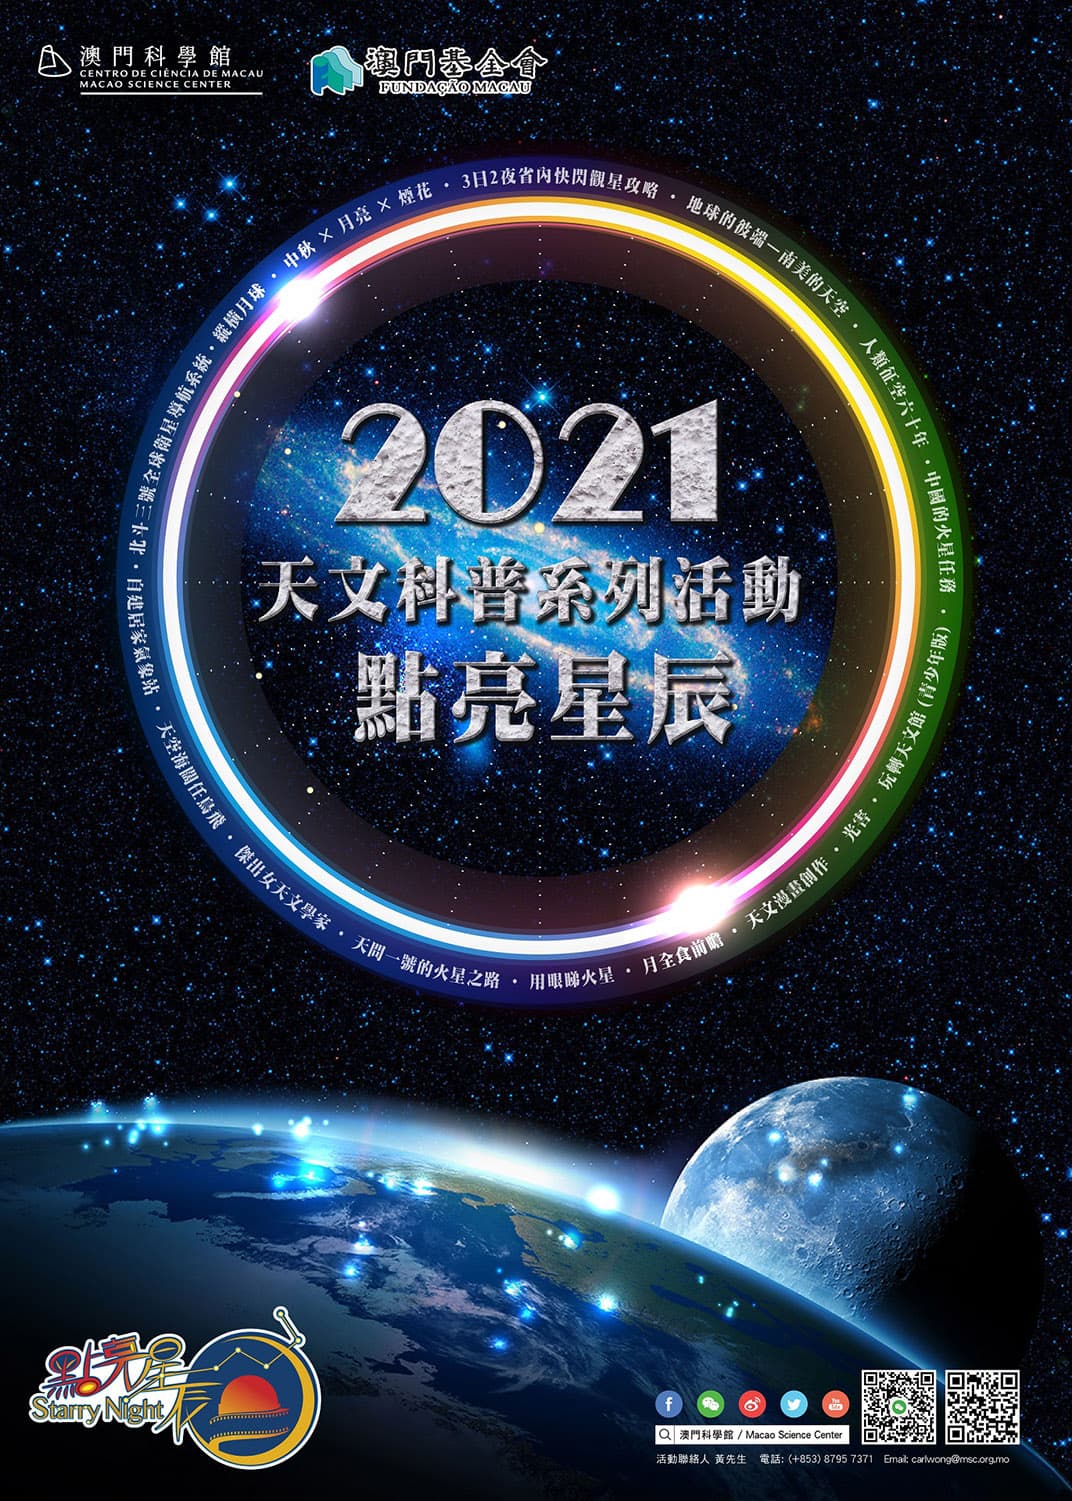 Starry Night - 2021 (2021-00-00)